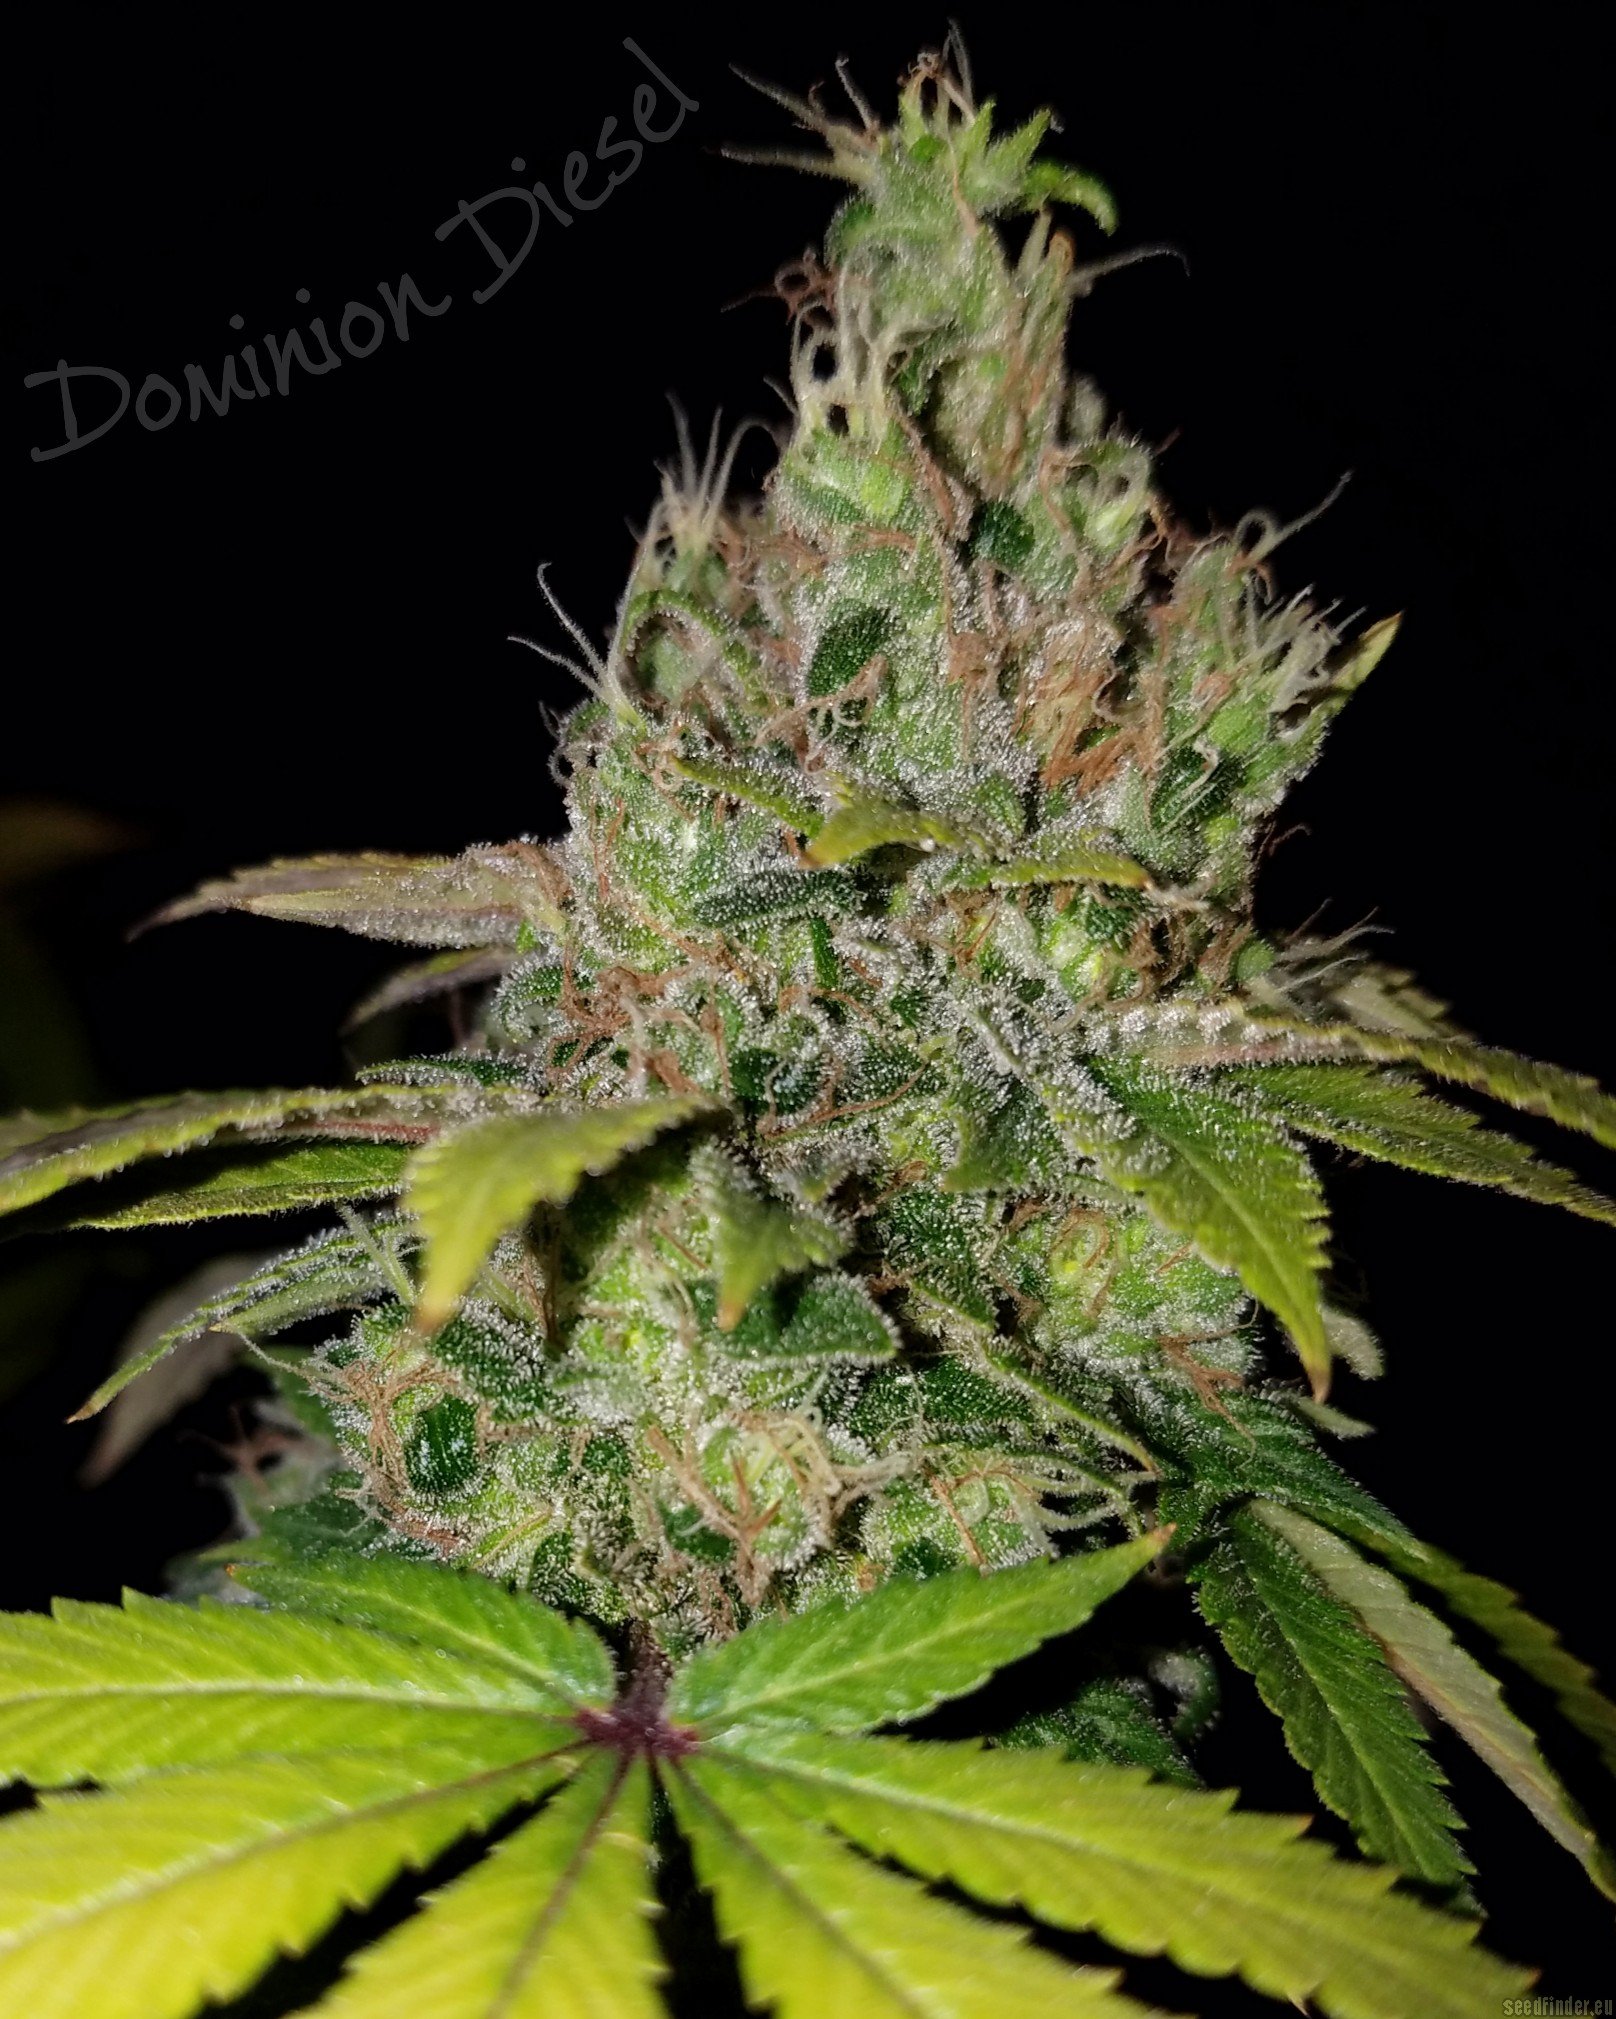 dominion-diesel-dominion-seed-company-cannabis-strain-info